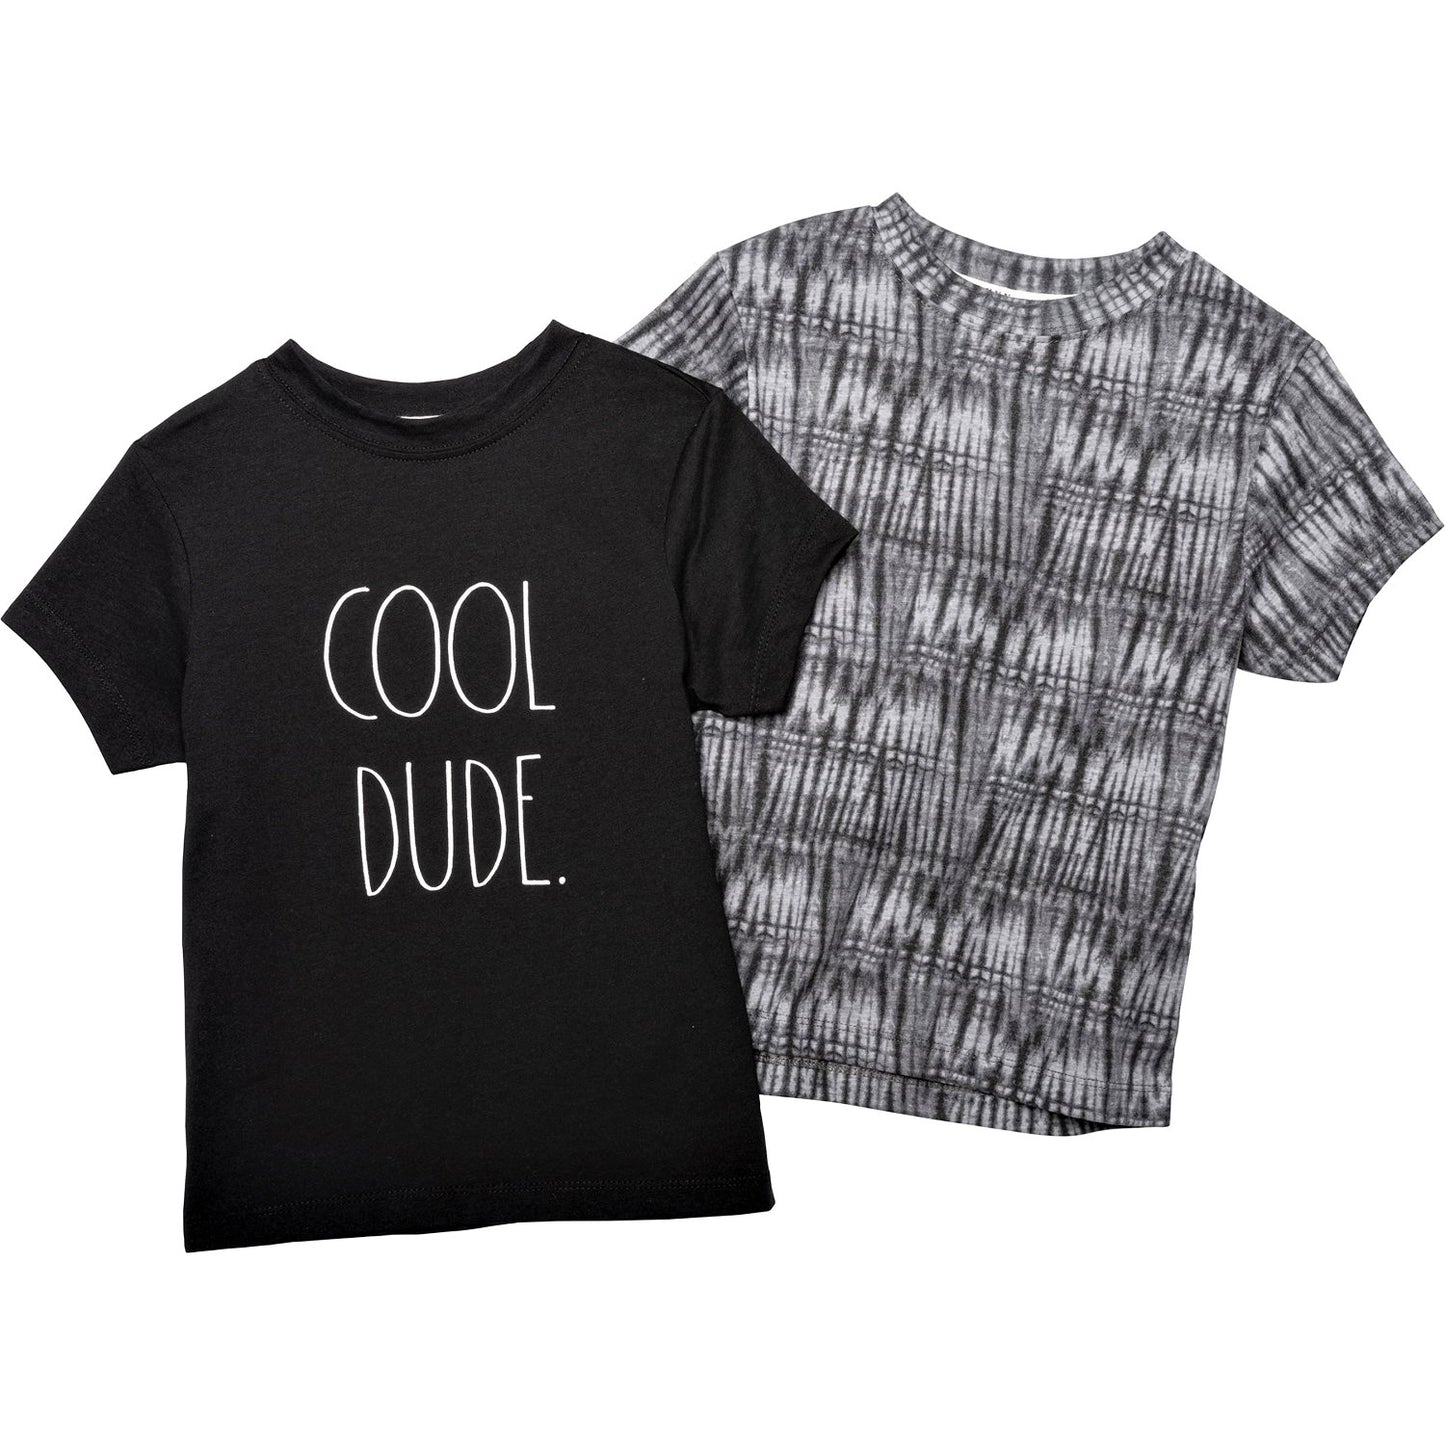 Rae Dunn 2-Pack Cool Dude Cotton Short Sleeve T-Shirts